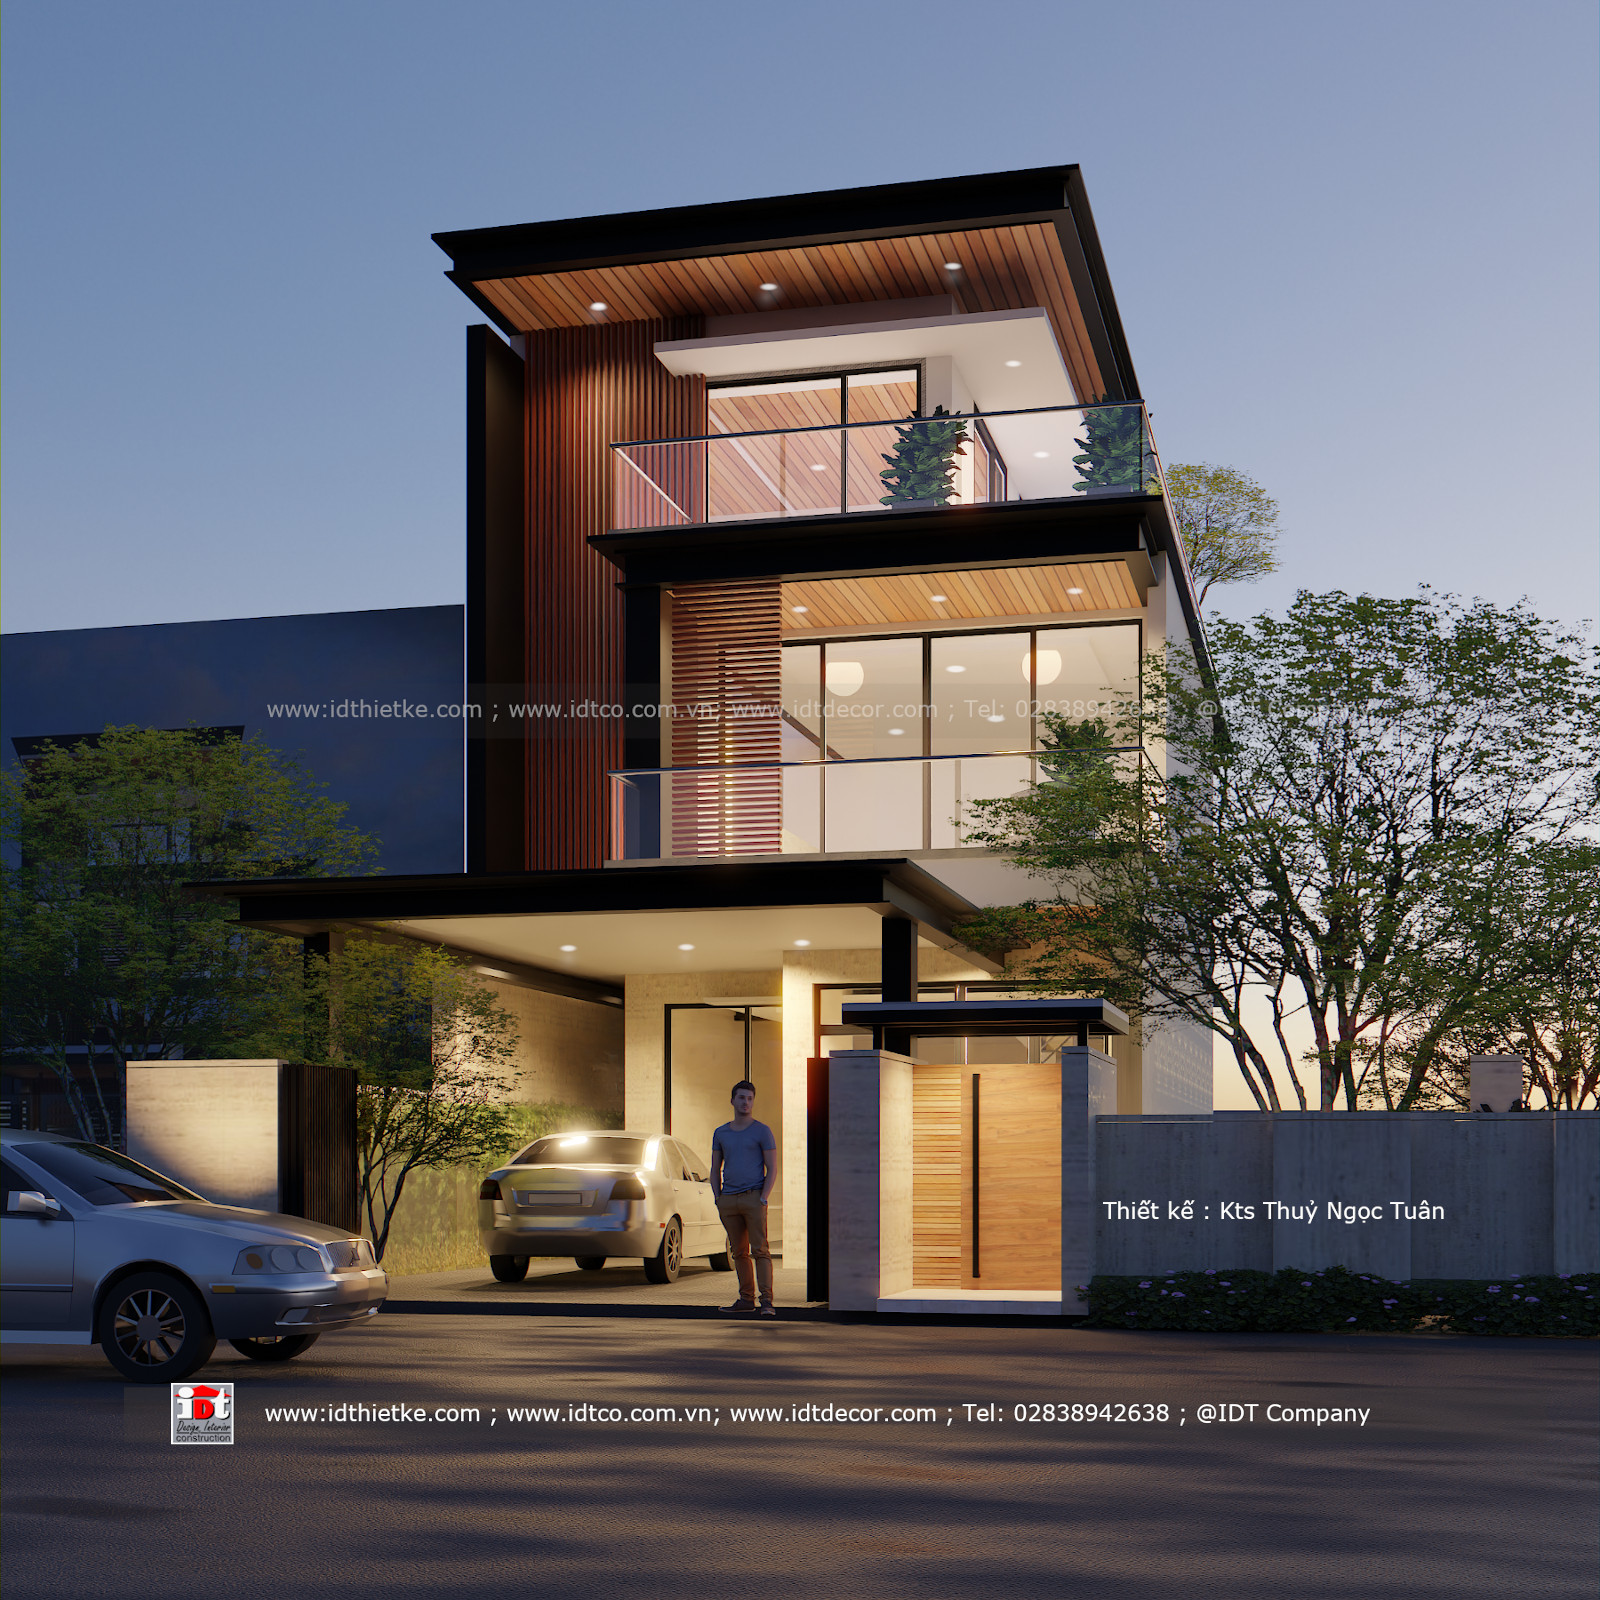 Modern luxury villa design with flat roof